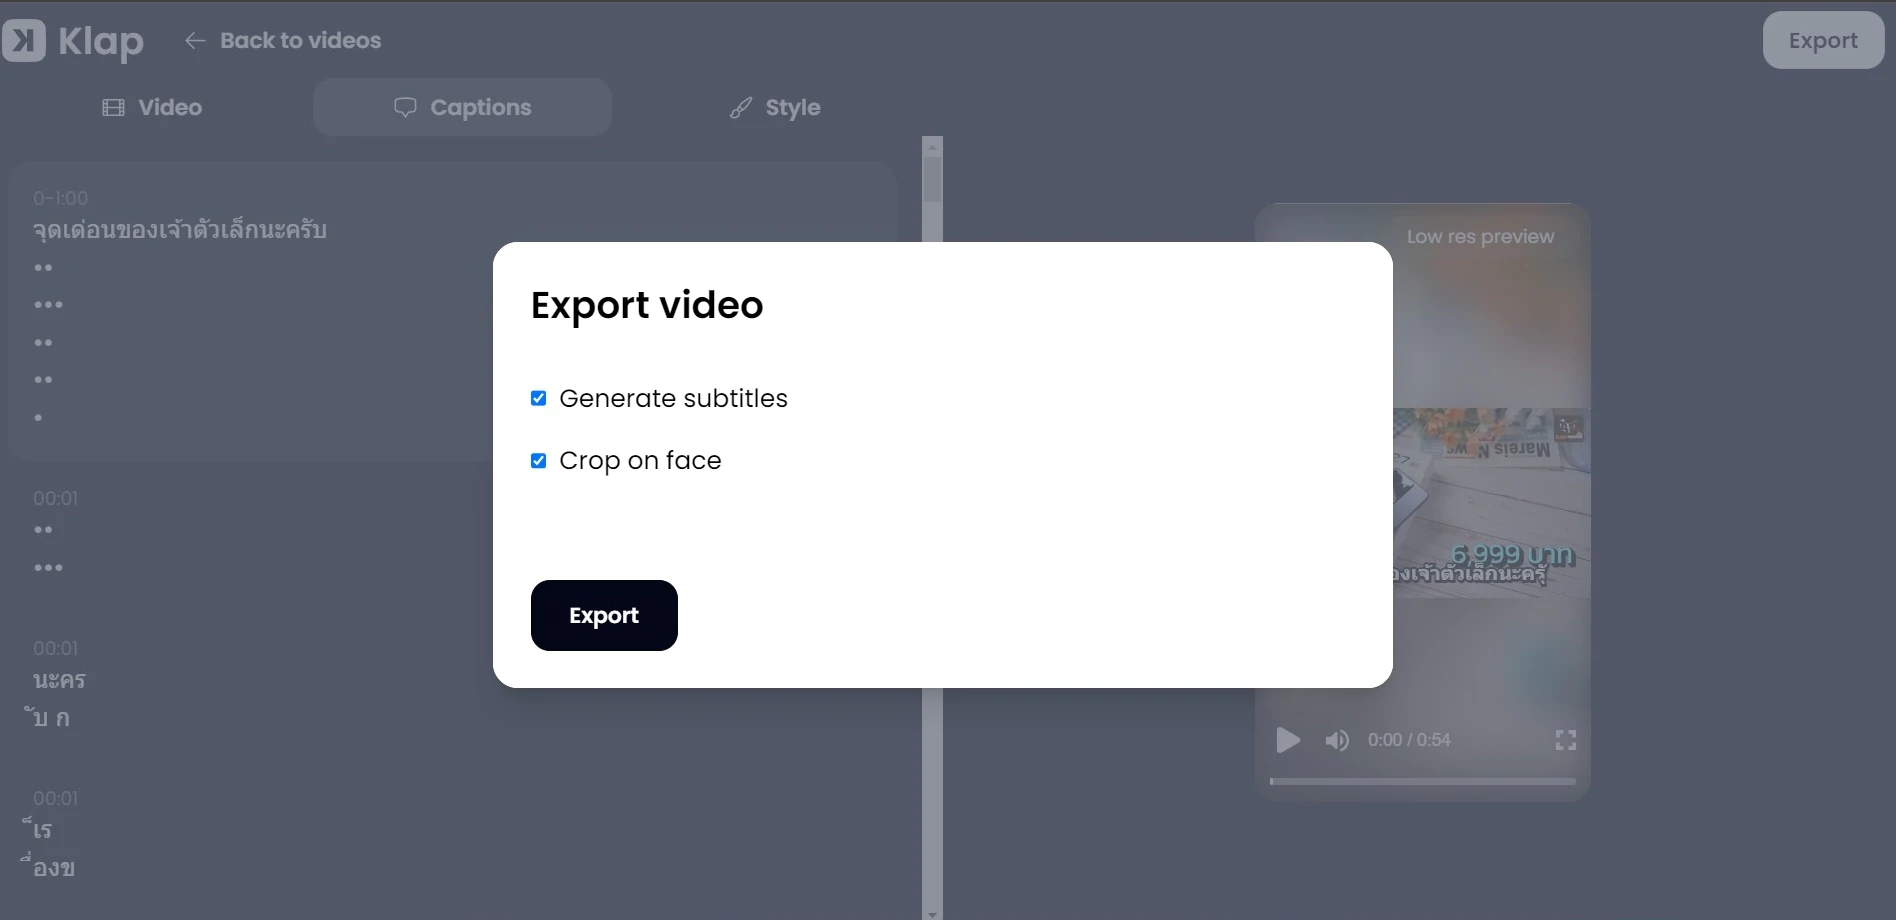 how to create video for tiktok reels shorts by klap form youtube 11 | AI | [How to] วิธีสร้างคลิปวิดีโอสั้นเร็วขึ้น! แค่วางคลิป YouTube ลง TIKTOK, Reels, Shorts ในคลิกเดียว